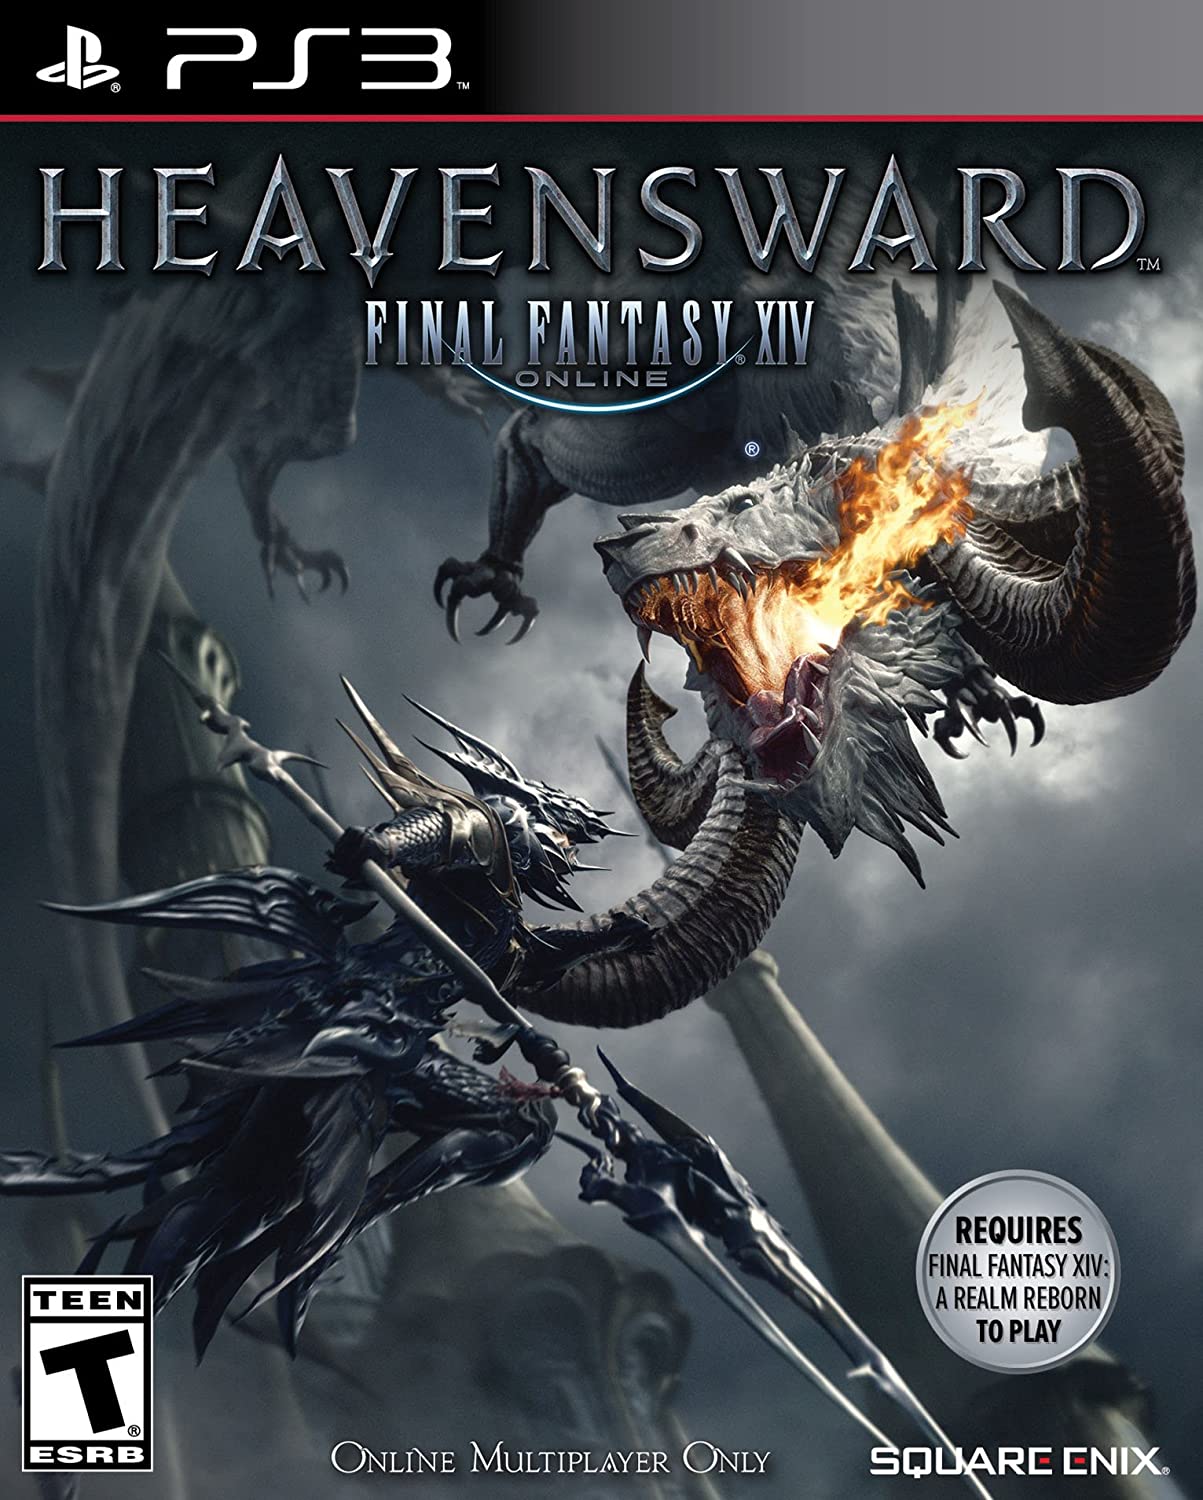 jaquette du jeu vidéo Final Fantasy XIV: Heavensward